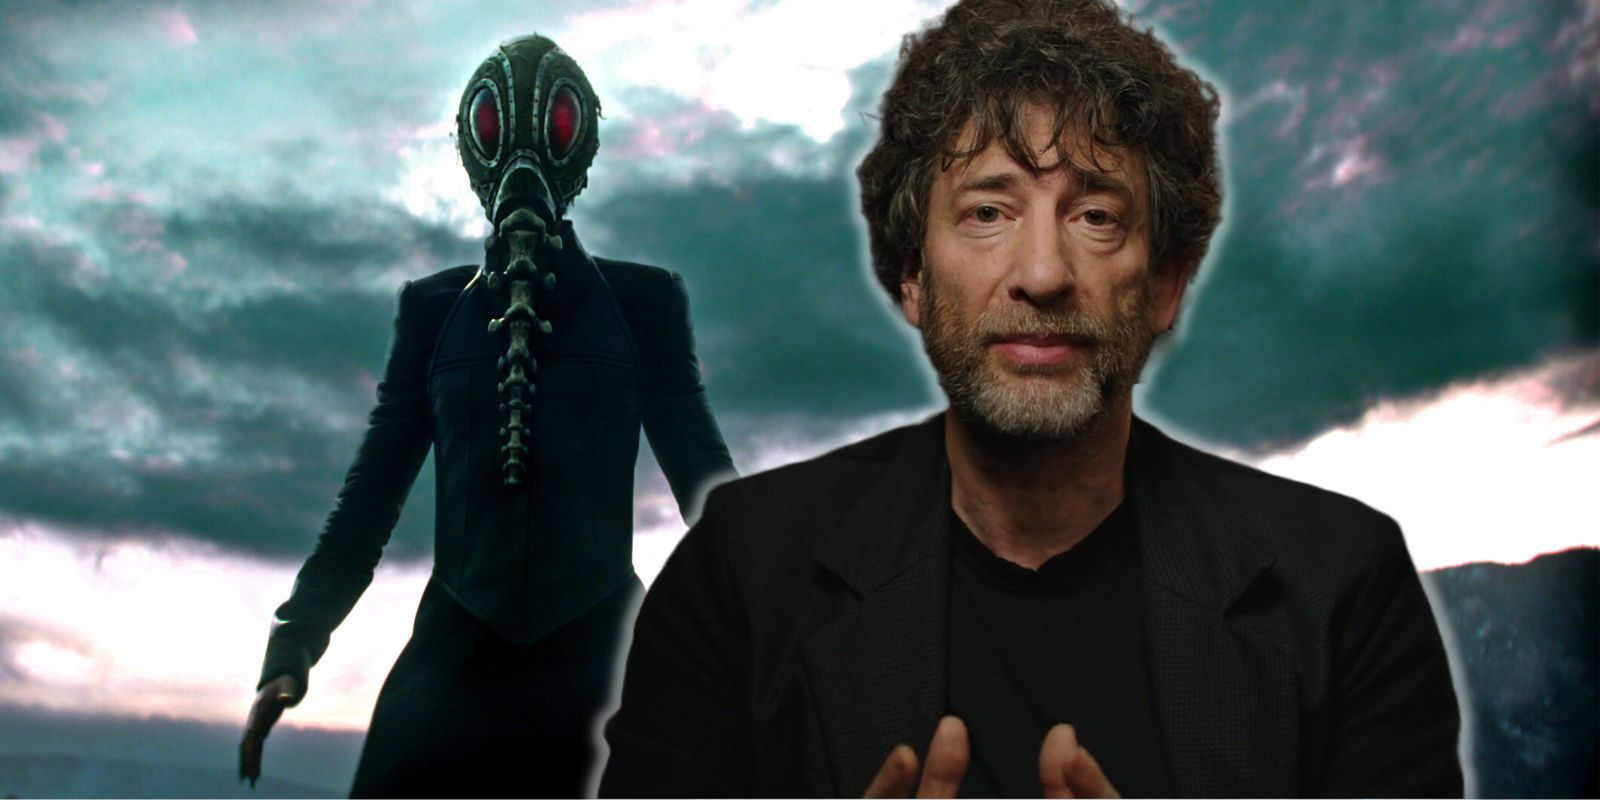 Neil Gaiman posing alongside Morpheus, who's currently wearing his helm